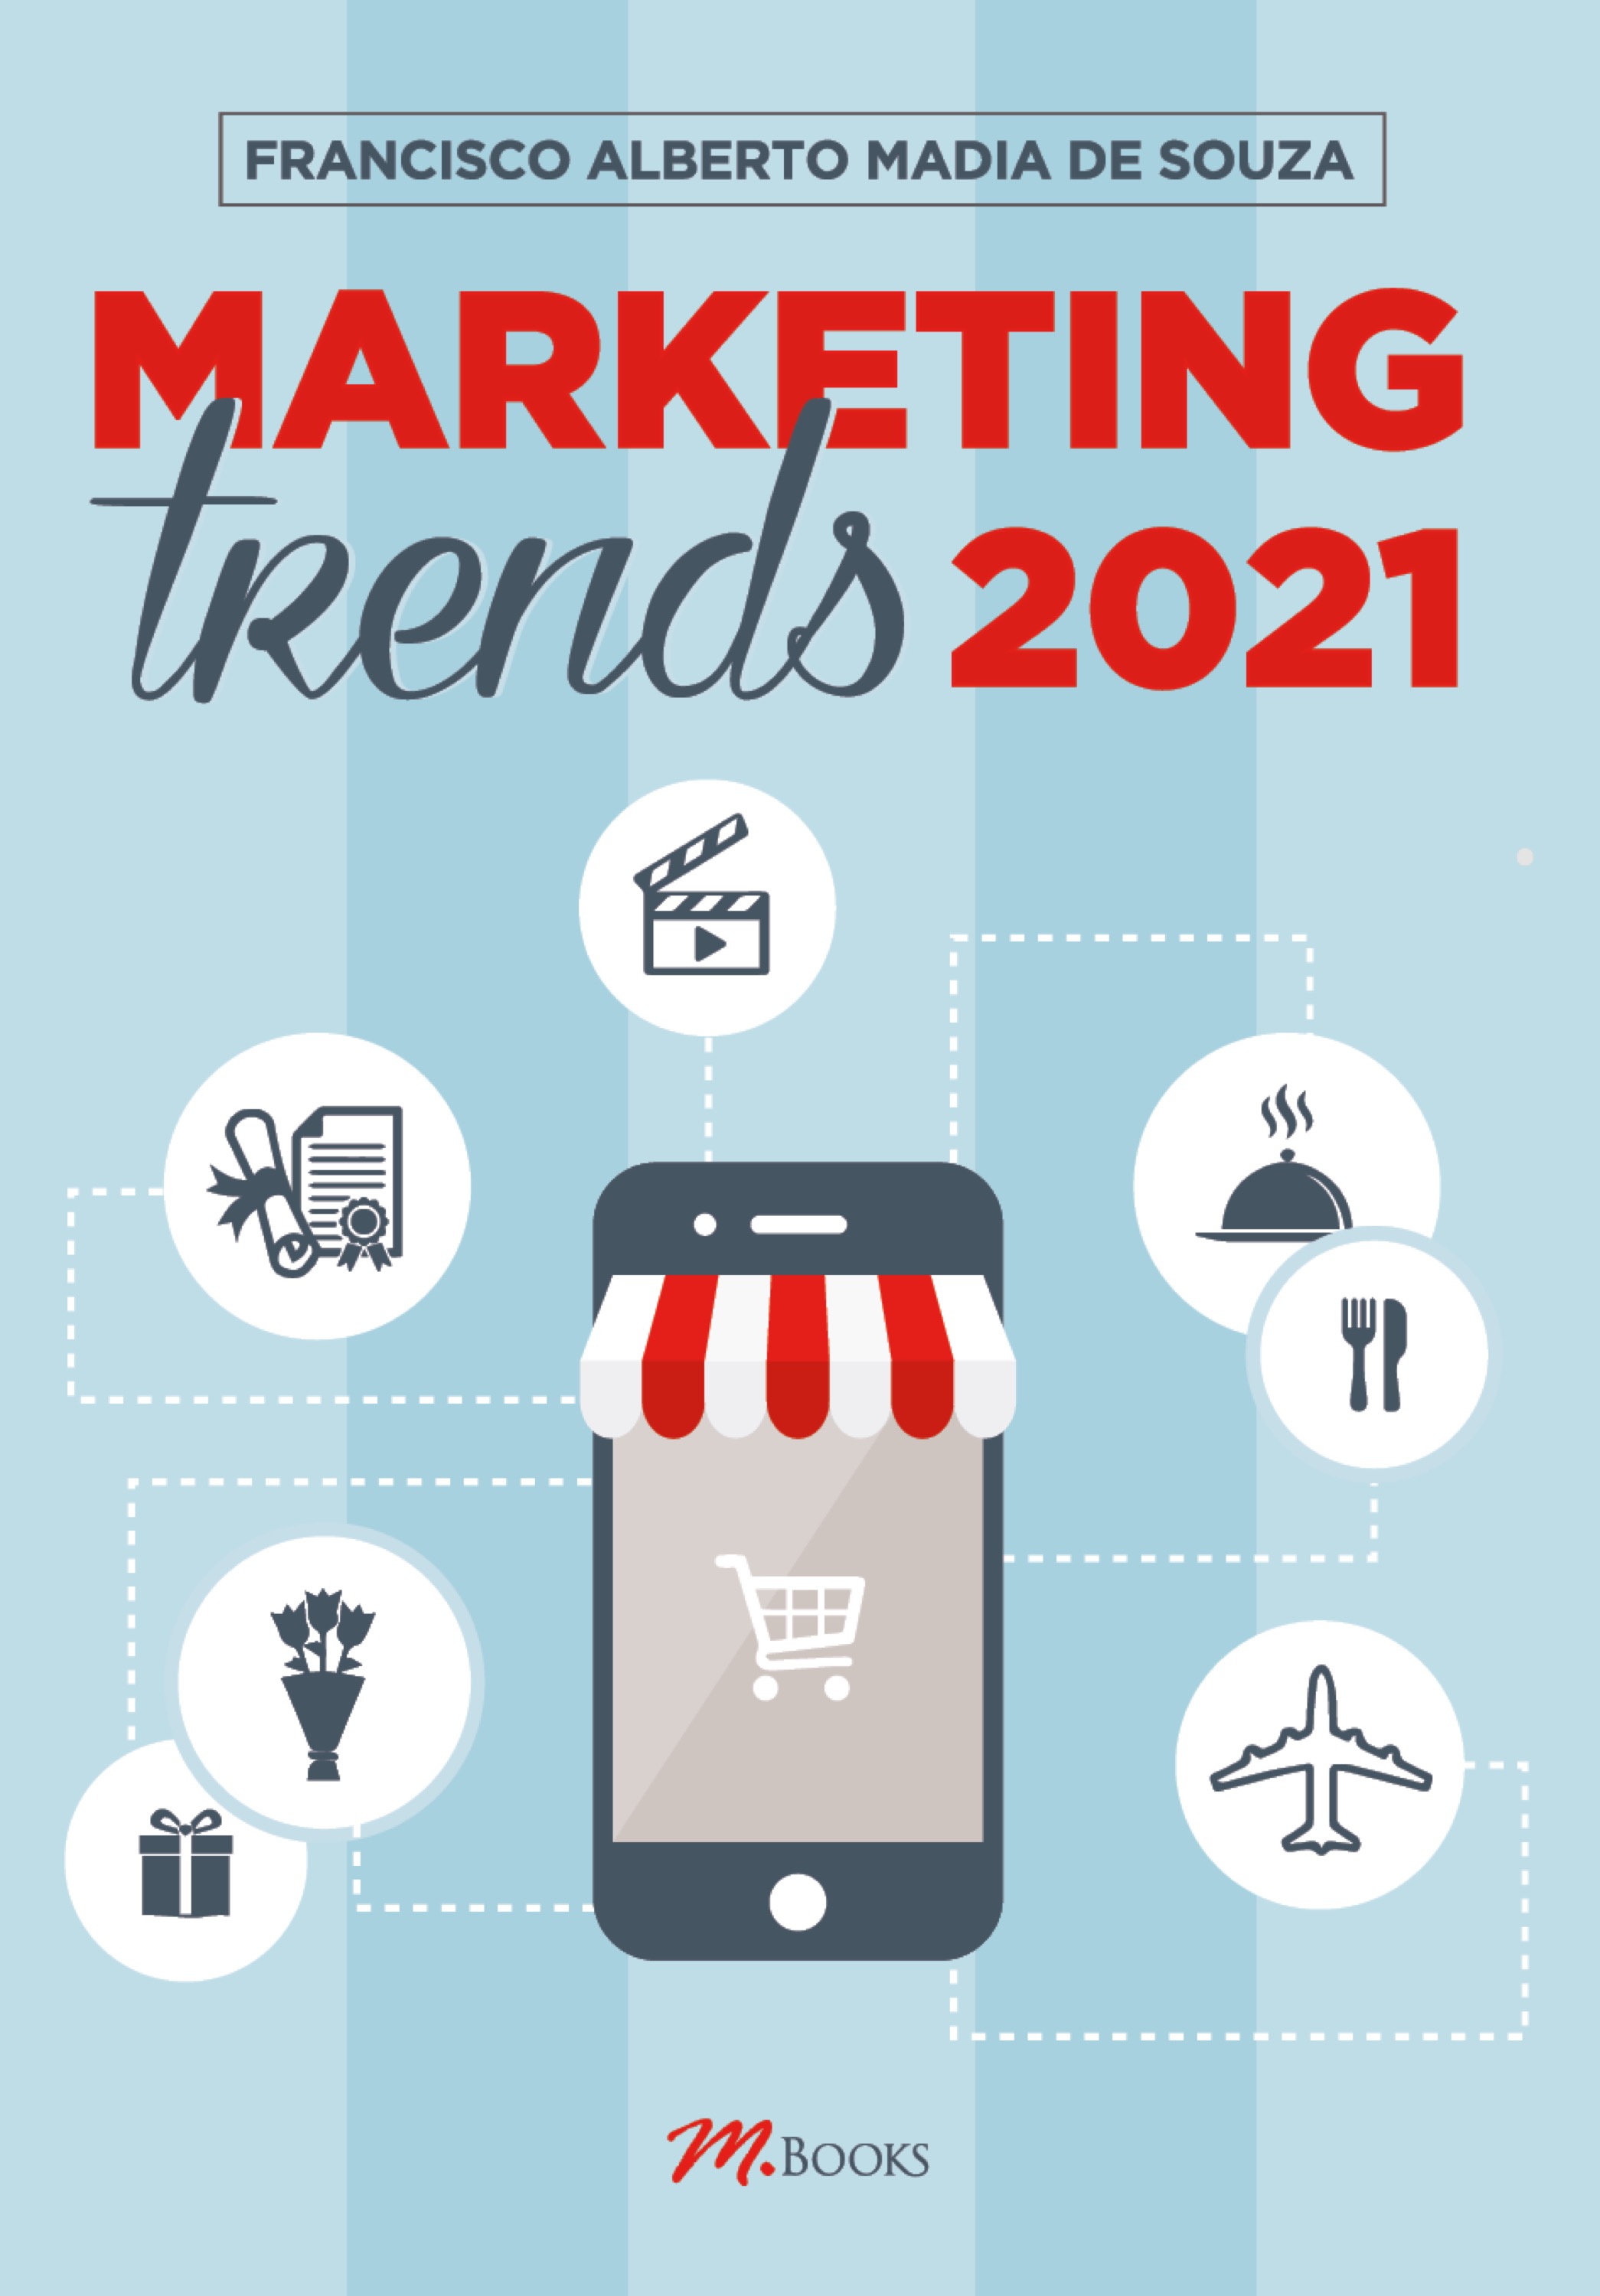 Marketing trends 2021